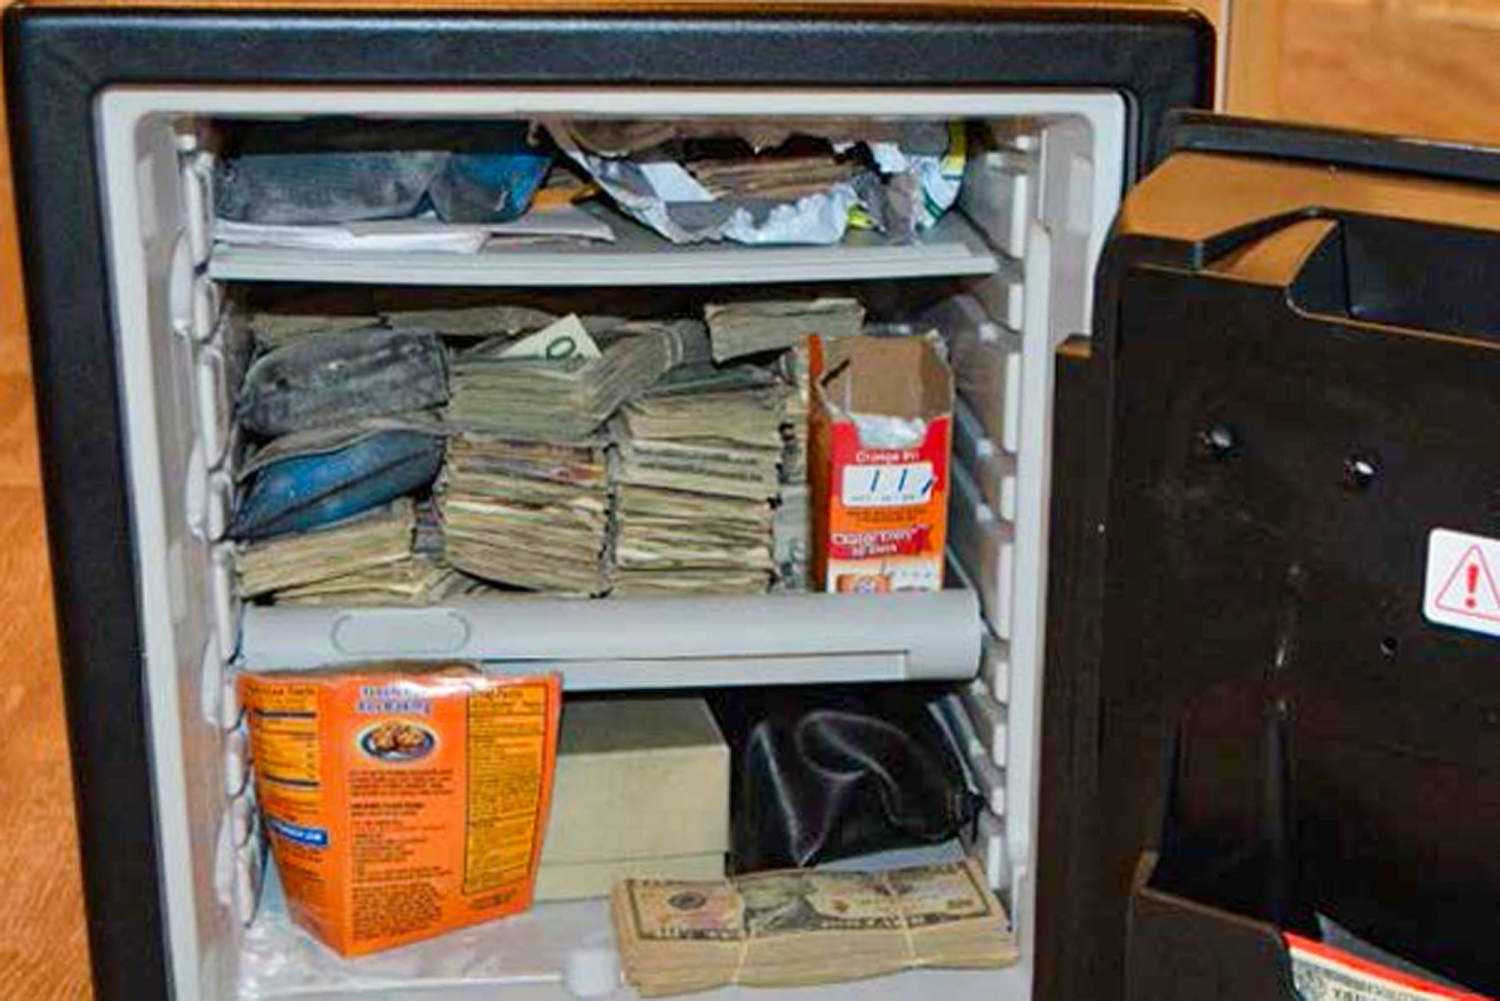 California education official embezzled over $16 million, hid cash in mini fridge